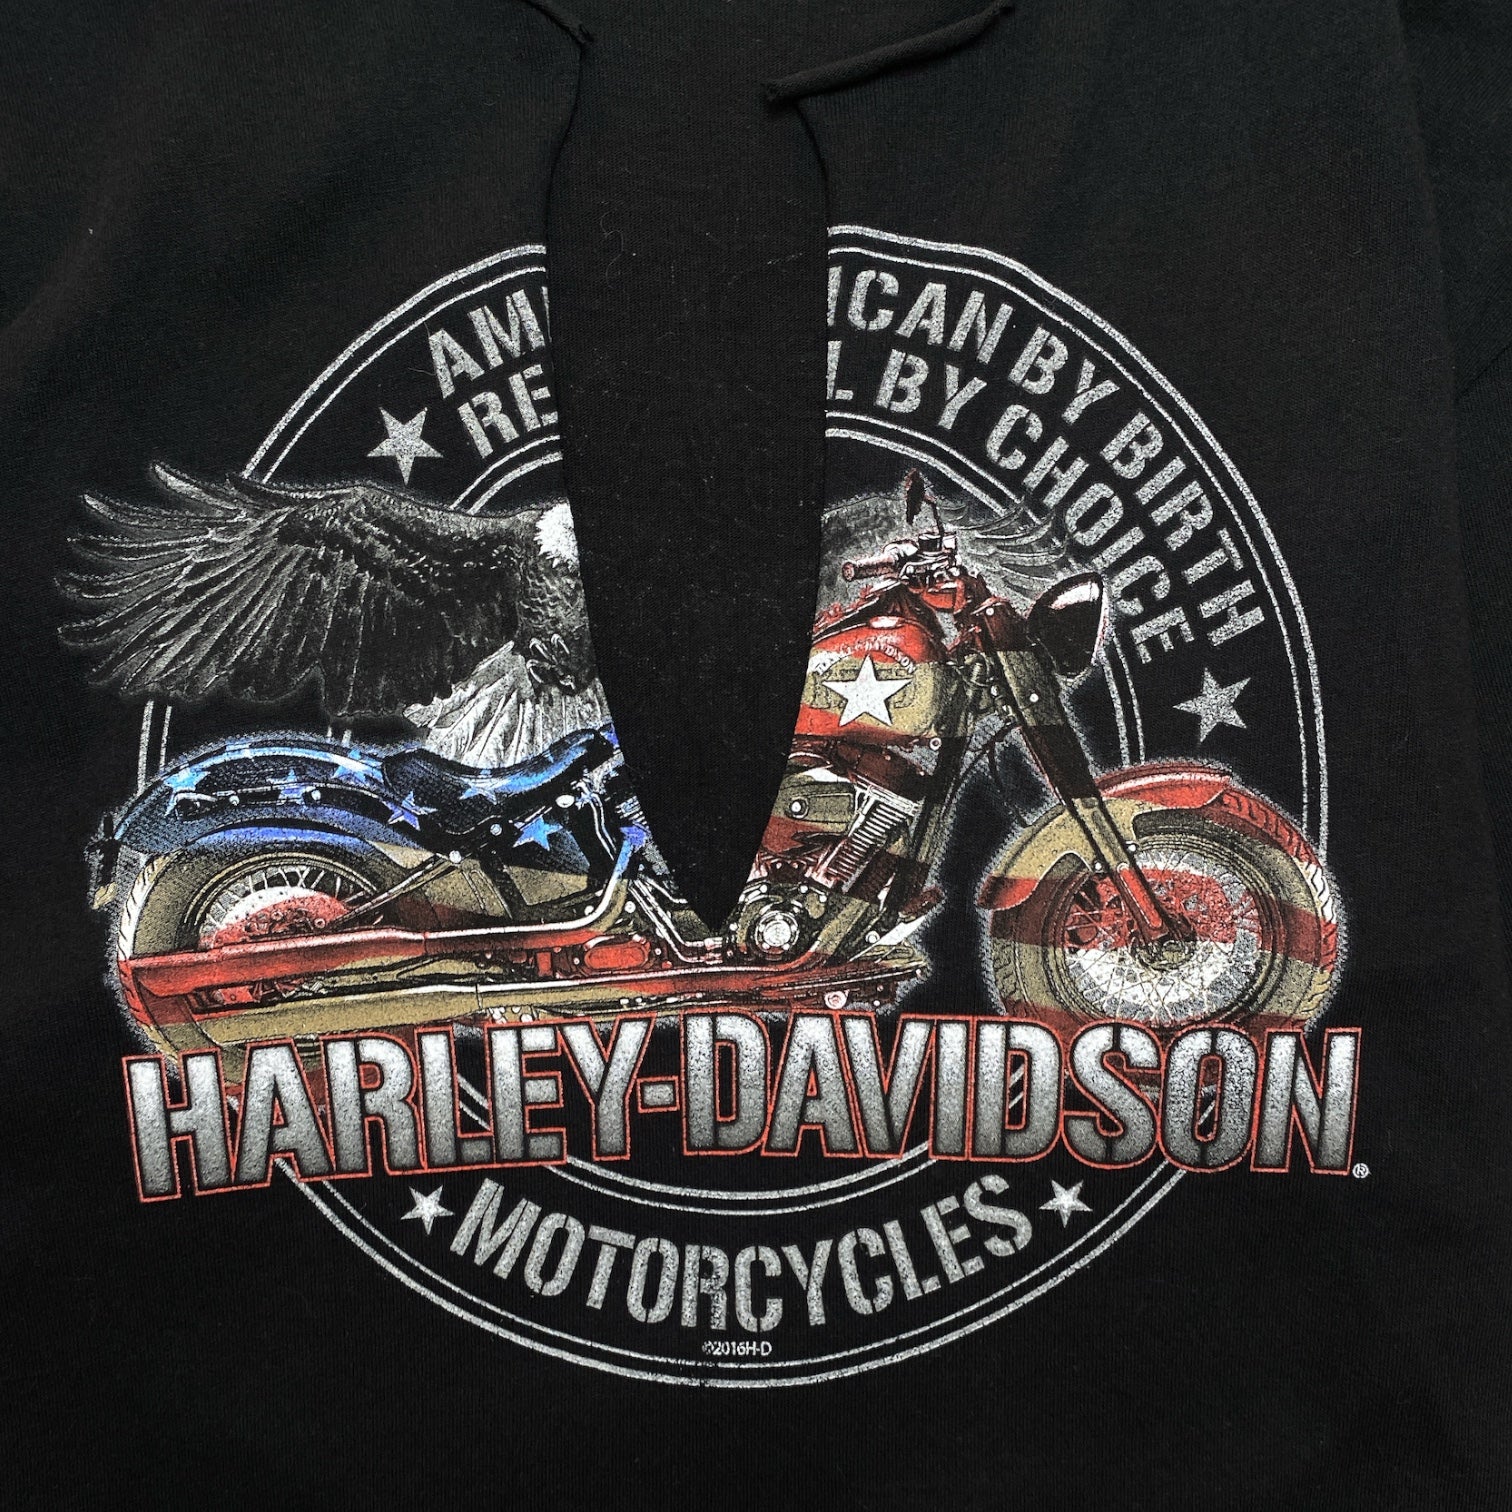 HARLEY-DAVIDSON MOTOR CYCLES Tee California